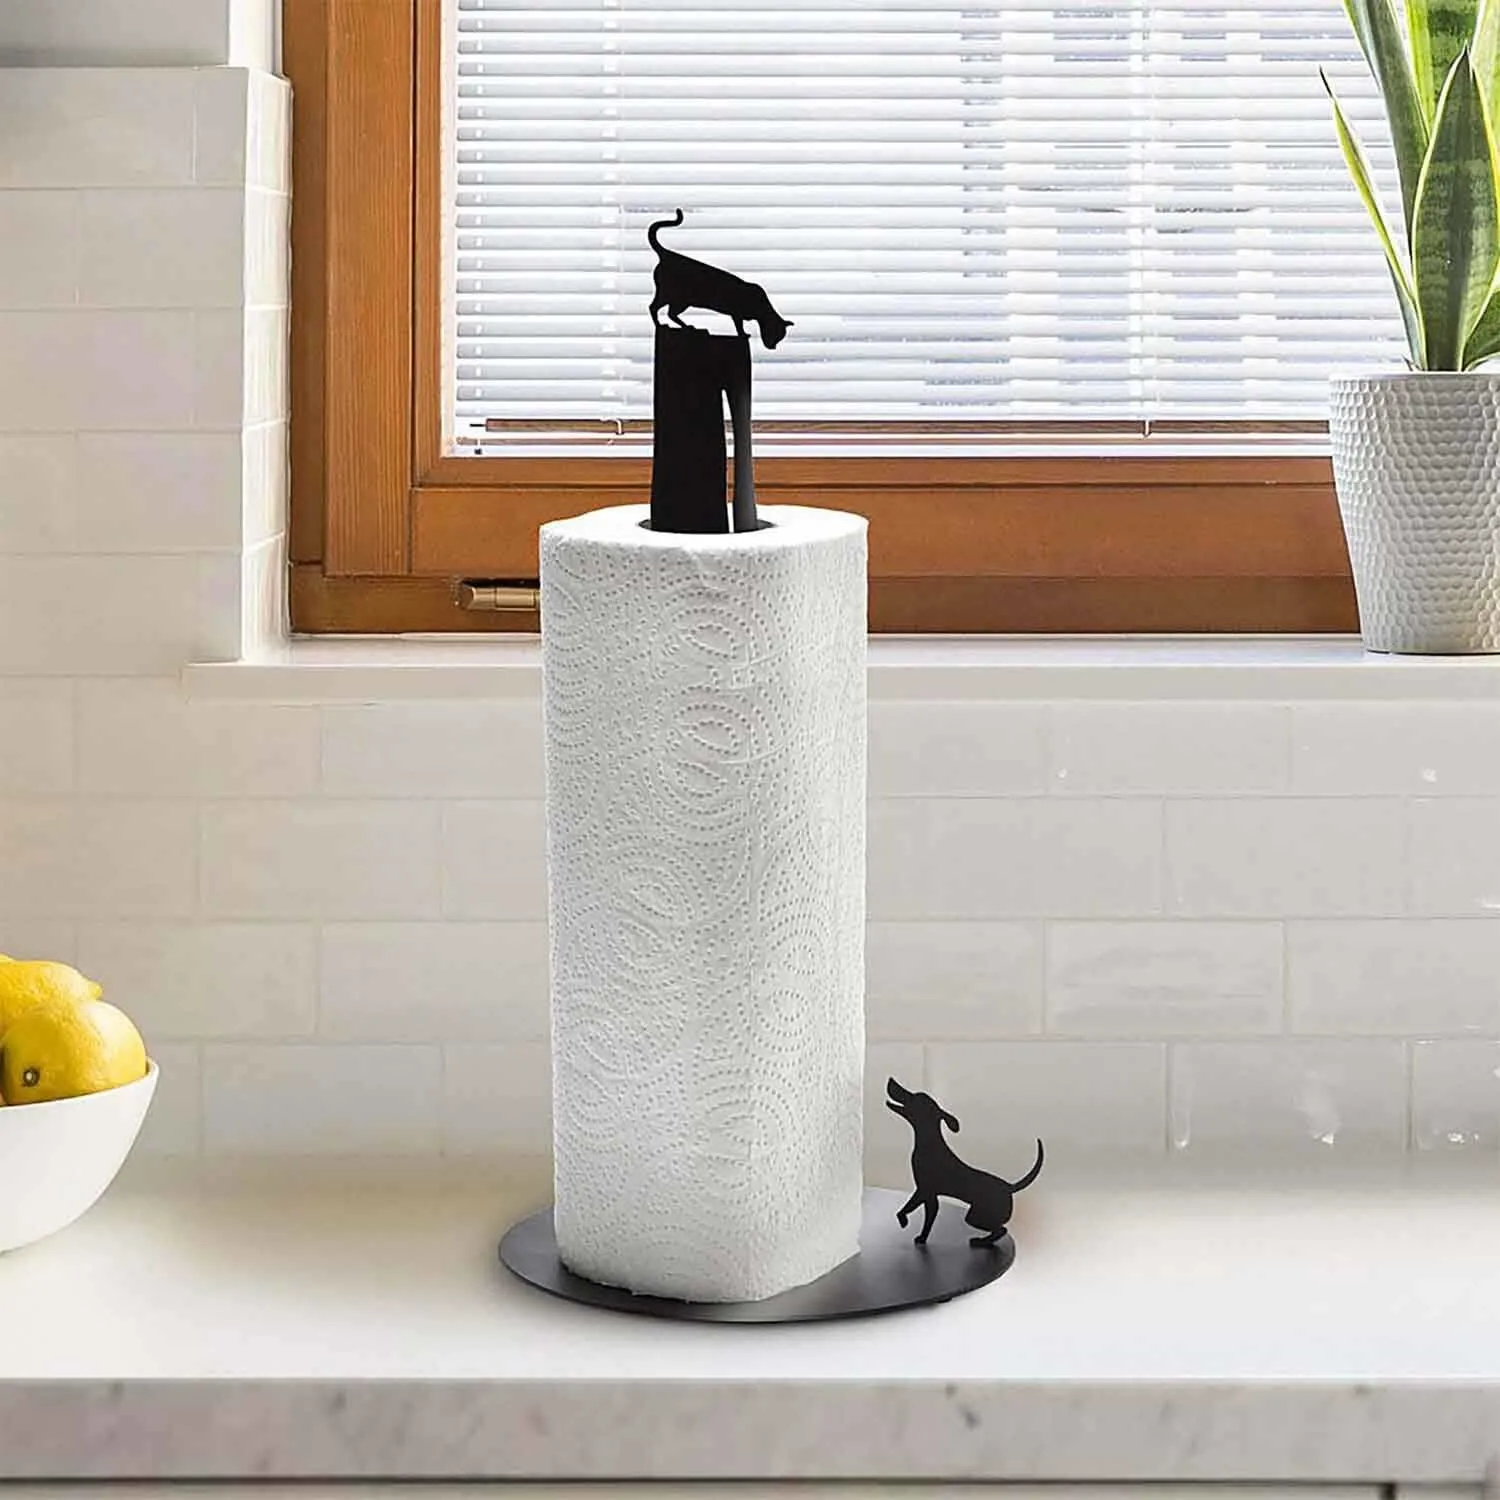 Paper Towel Holder Metal Dryer Kitchen Bathroom Accessories Towel Roll Rack Organizer Shelf Set Dog Cat Crow Figure Stand Gift